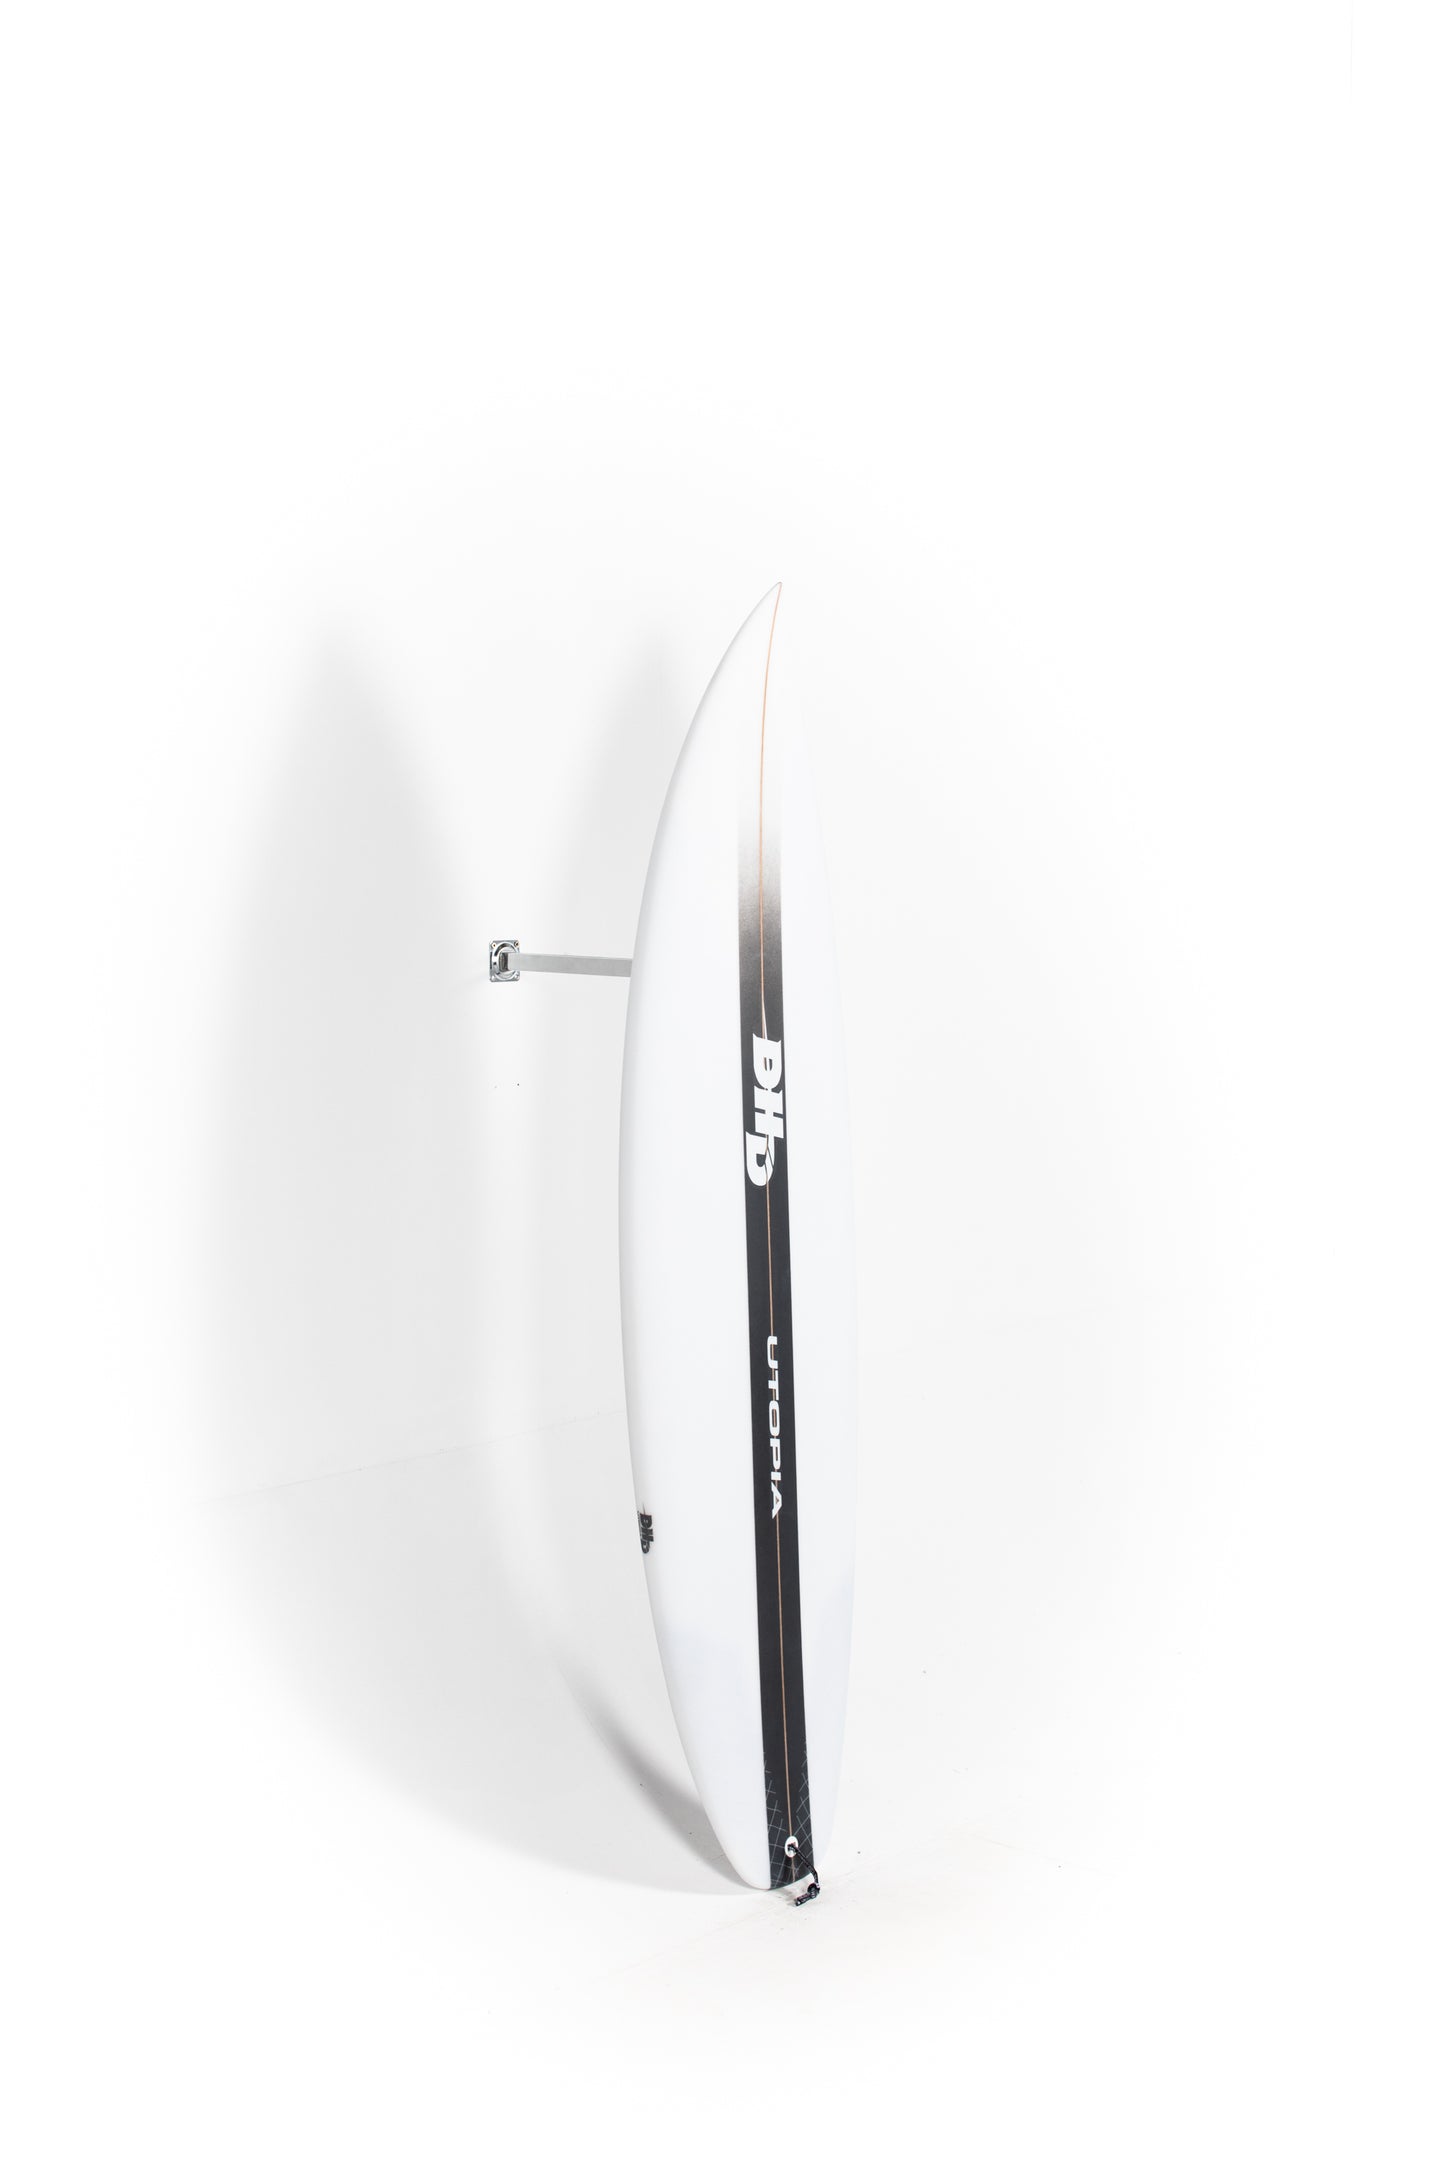 
                  
                    Pukas Surf Shop - DHD - UTOPIA by Darren Handley - 5'10" x 18 7/8" x 2 3/8" - 27.5L - DHDUTO510
                  
                